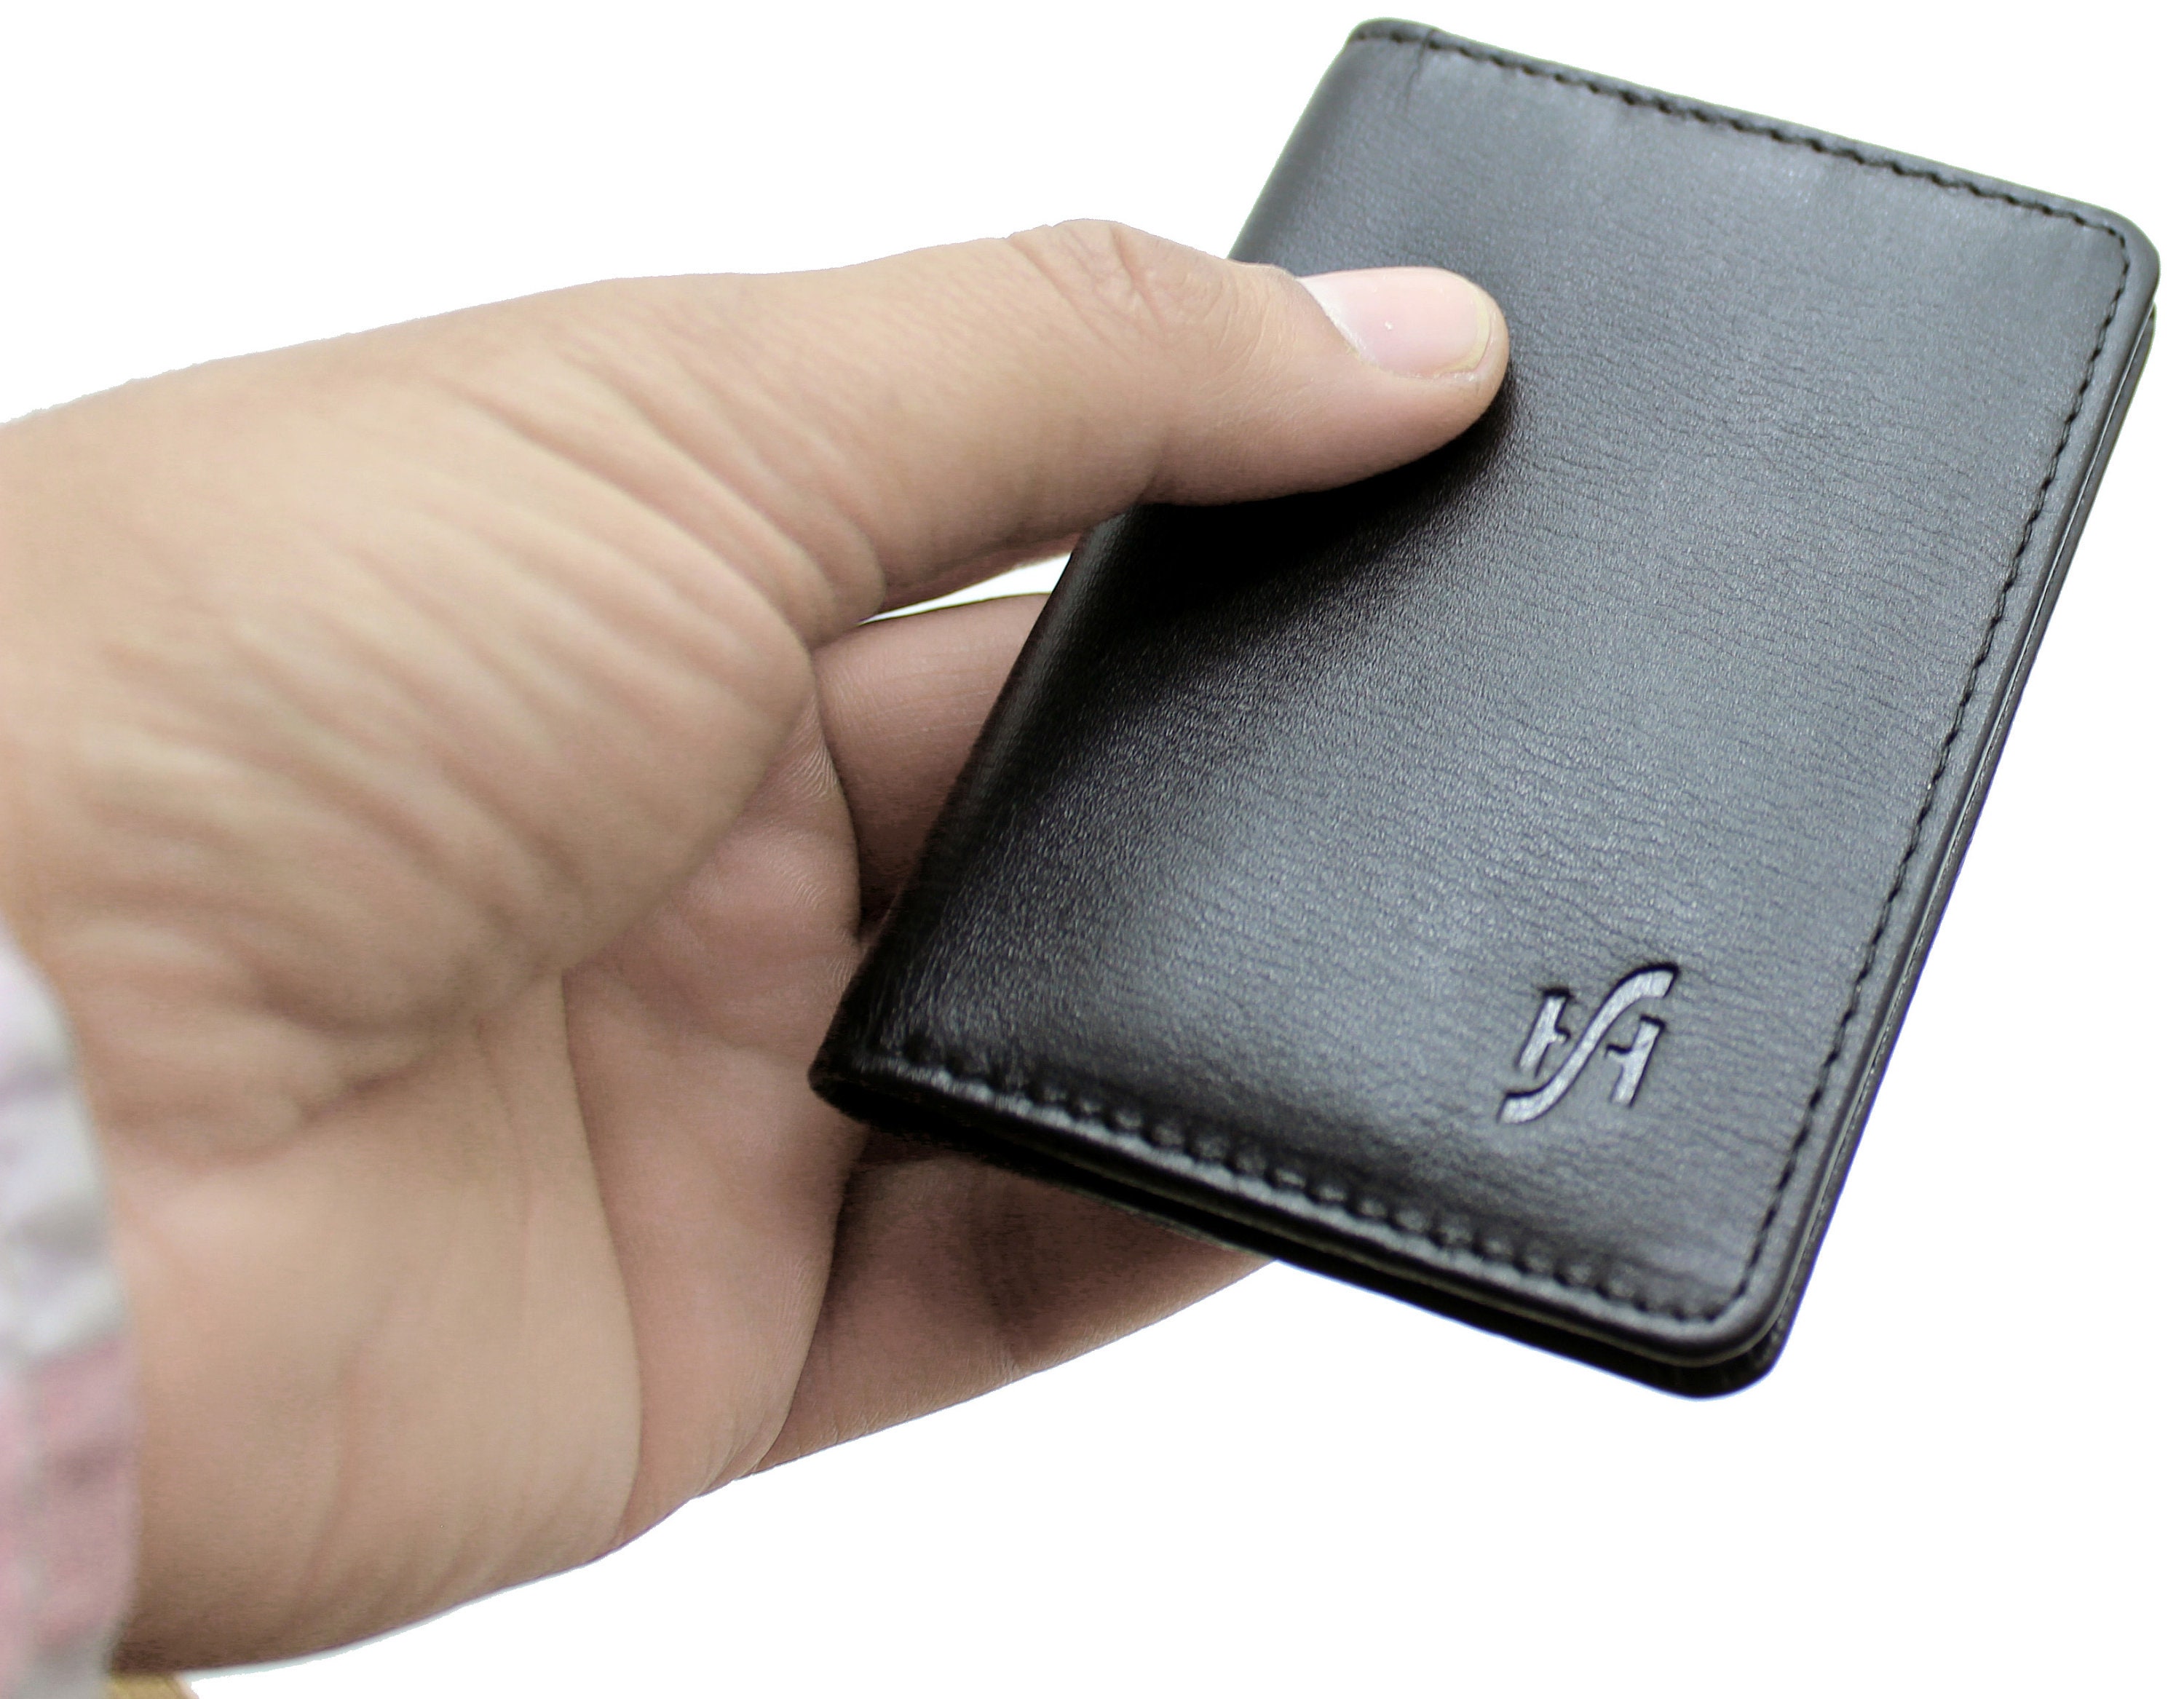 Premium Epi leather Credit Card Holder, Dark Green leather card